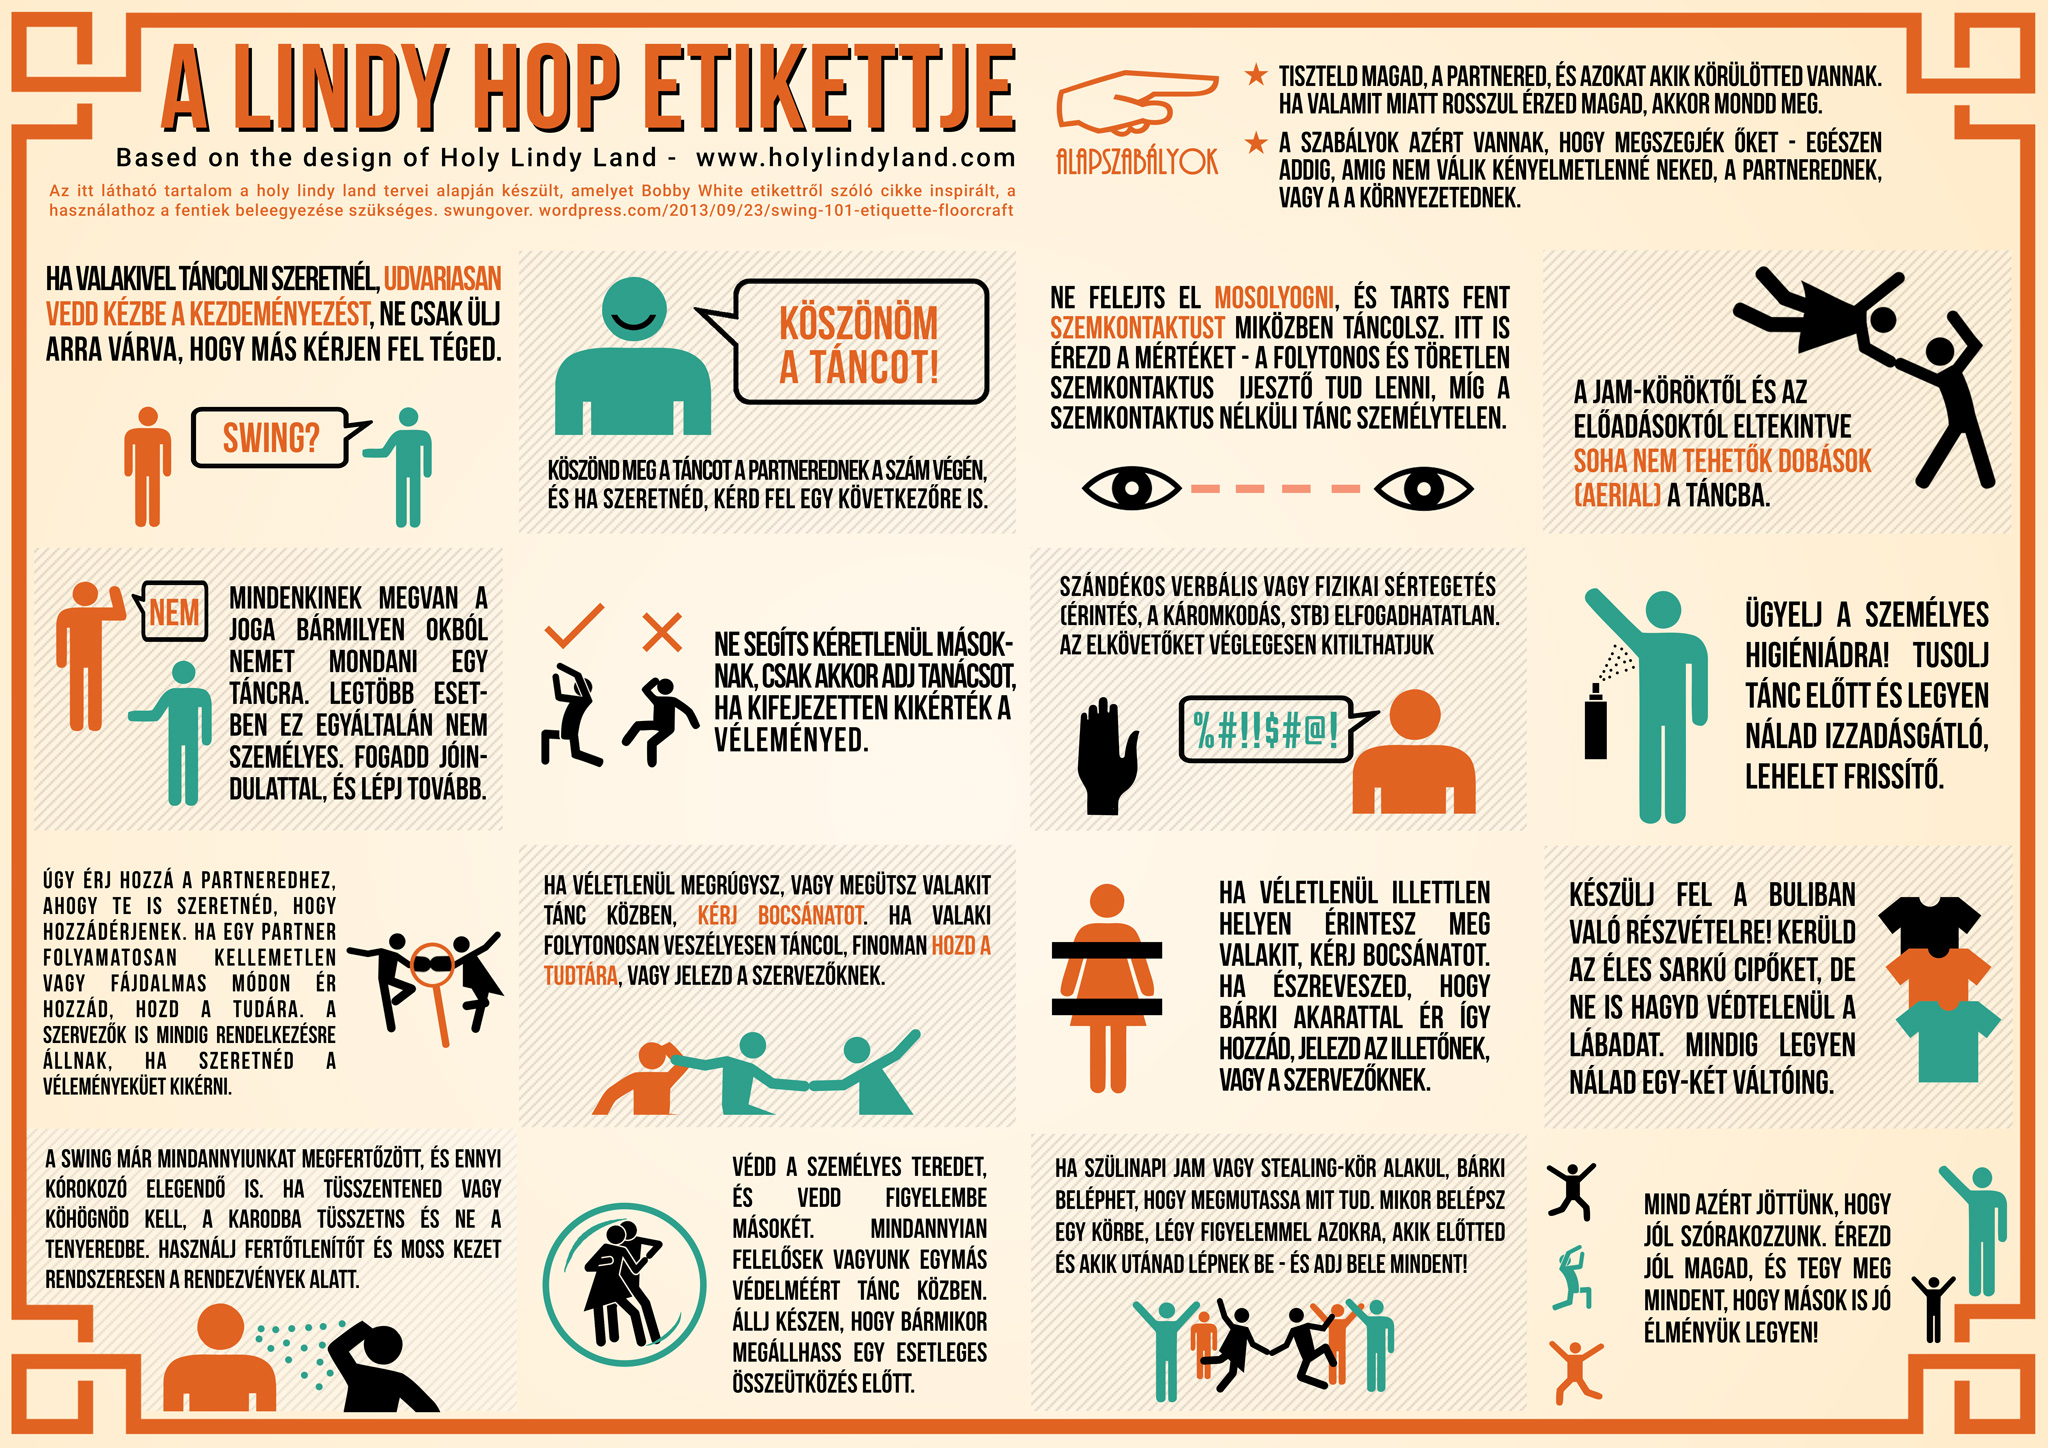 Lindy hop etikett_keep swinging budapest